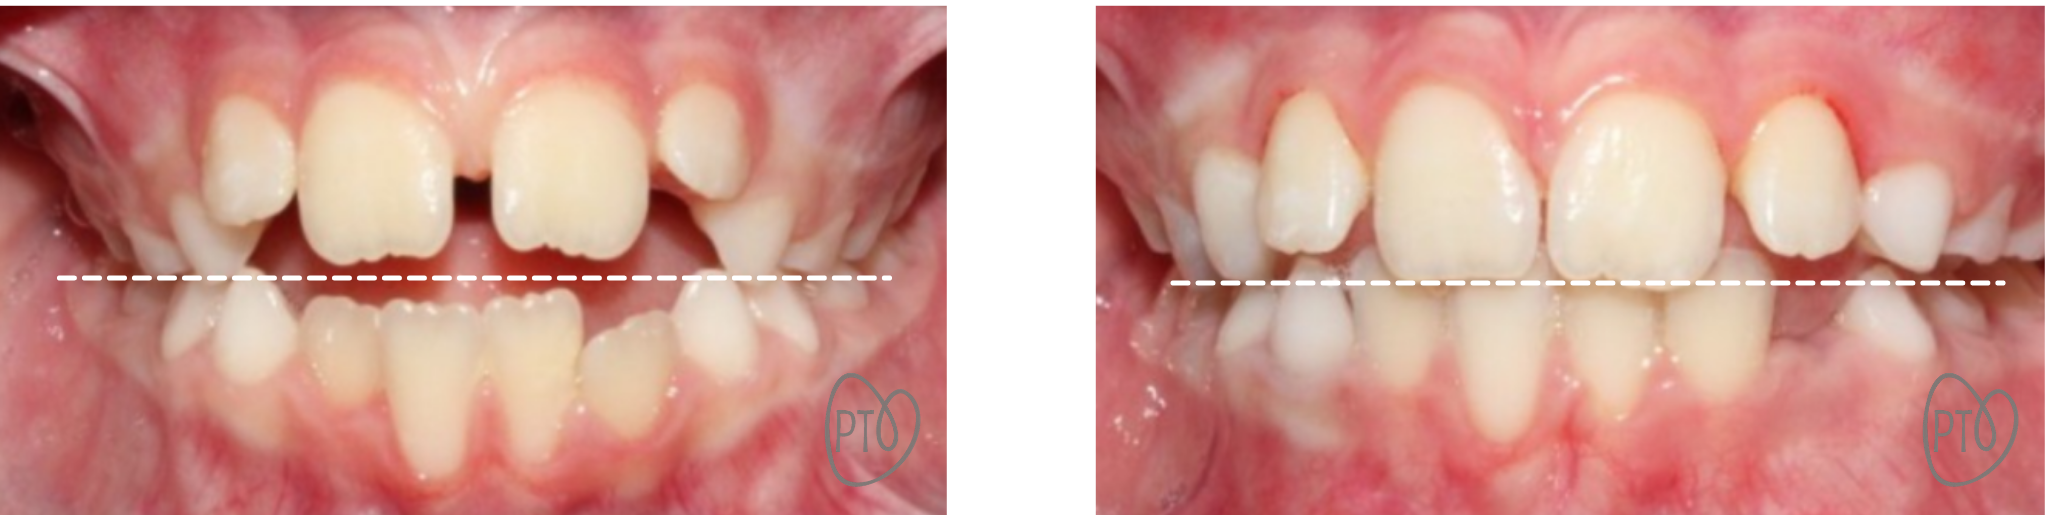 ortodoncia interceptiva tratamiento mordida abierta